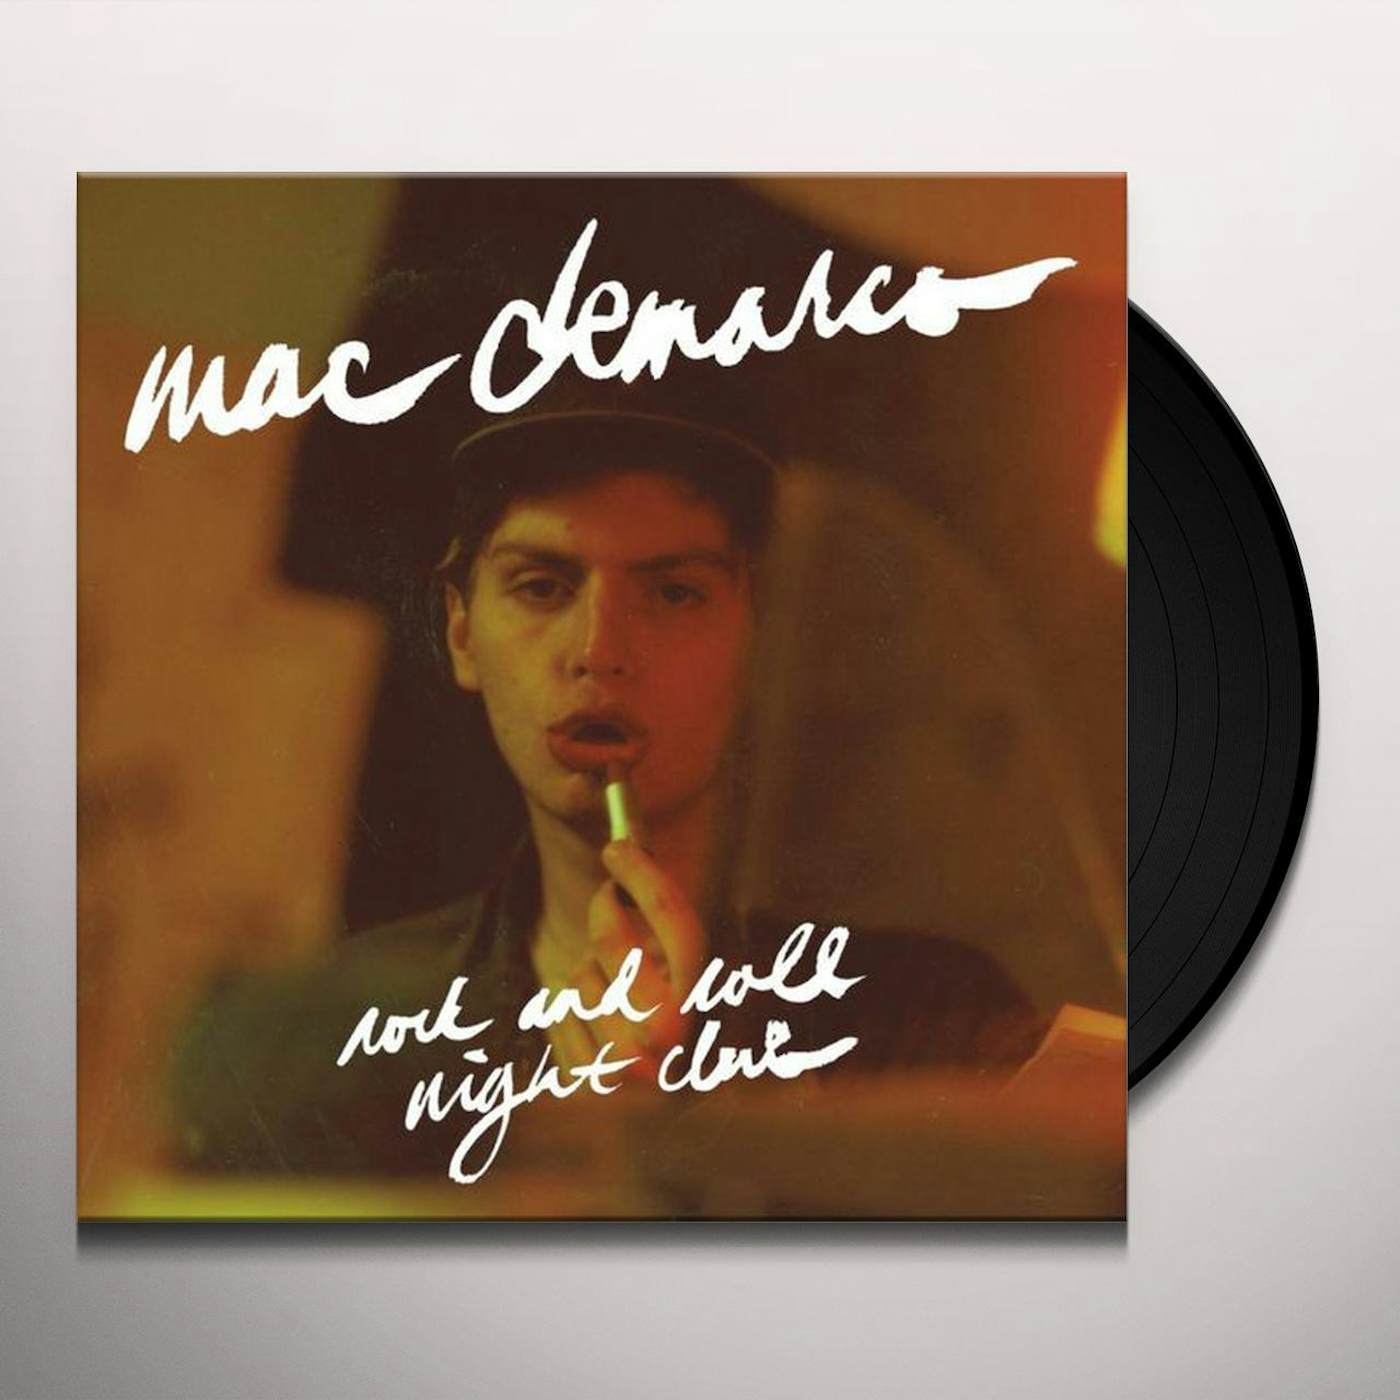 Mac DeMarco Rock And Roll Night Club Vinyl Record